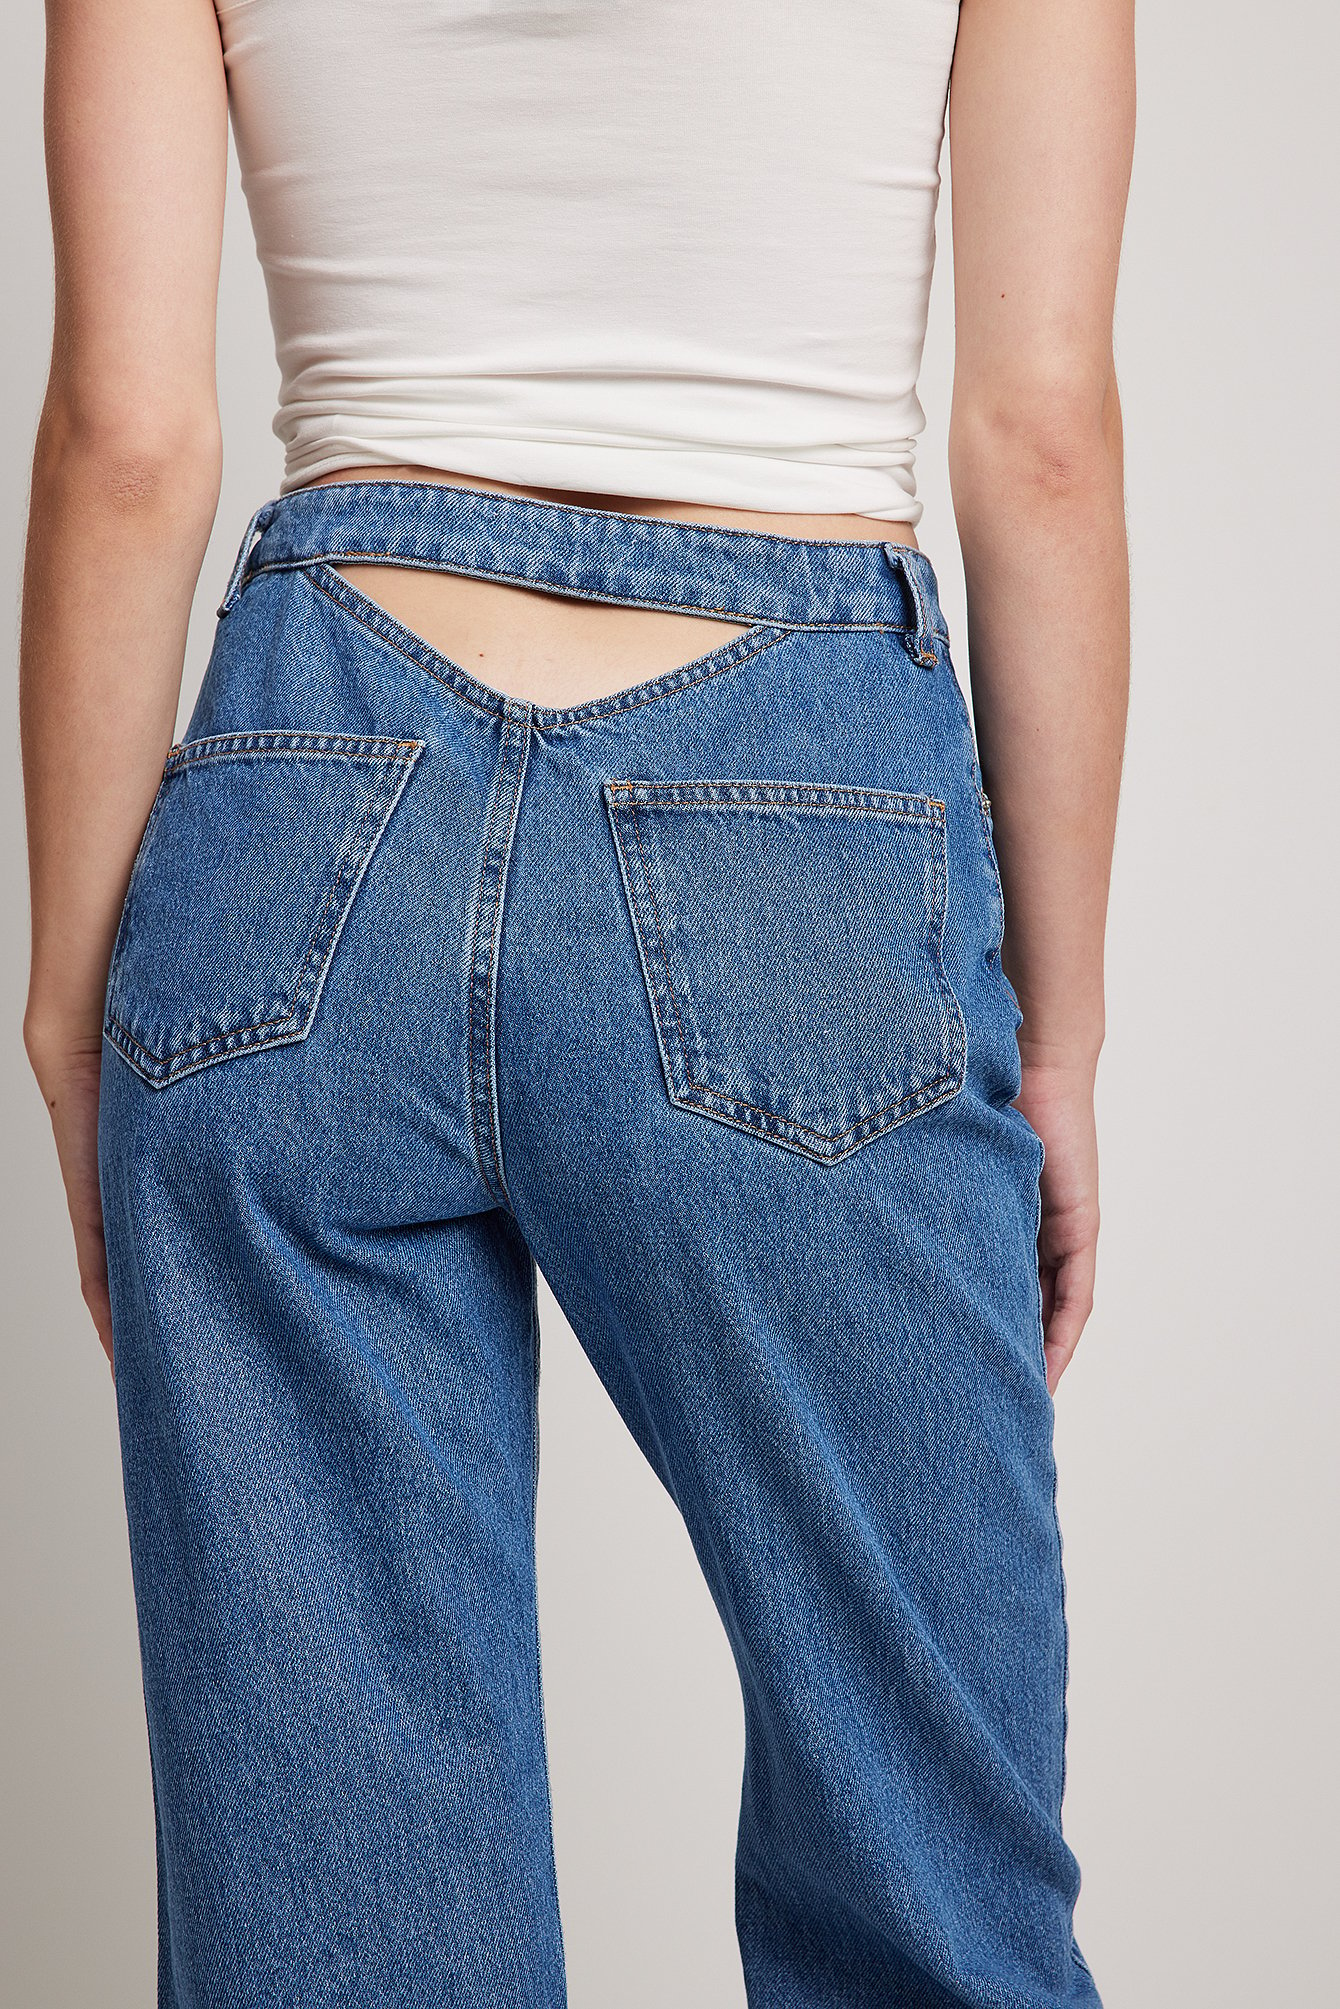 ANDWANG back cutout denim pants | skisharp.com